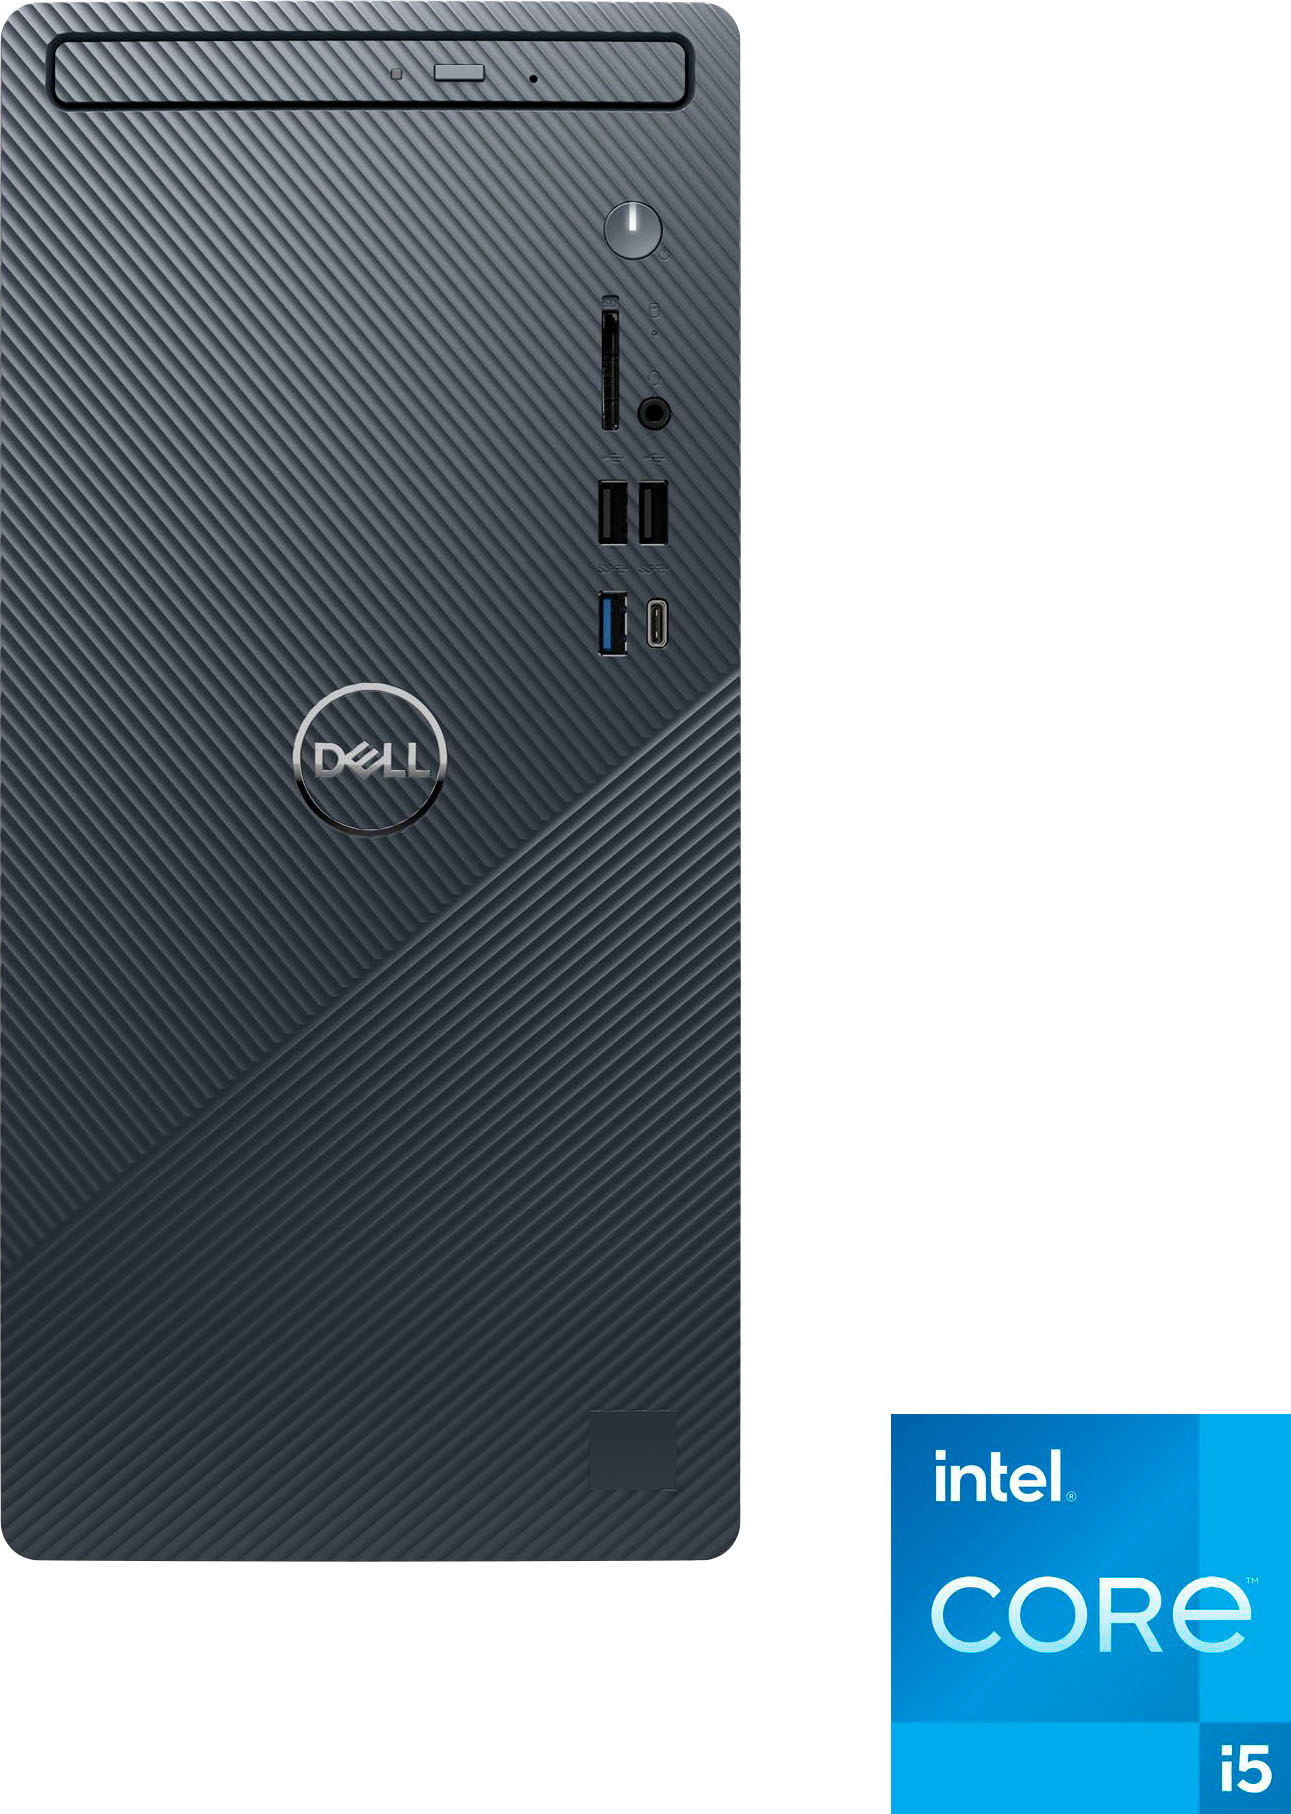 Dell Inspiron 3020 Desktop 13th Gen Intel Core i5 8GB Memory Intel UHD  Graphics 730 512GB SSD Mist Blue i3020-5234BLU-PUS - Best Buy